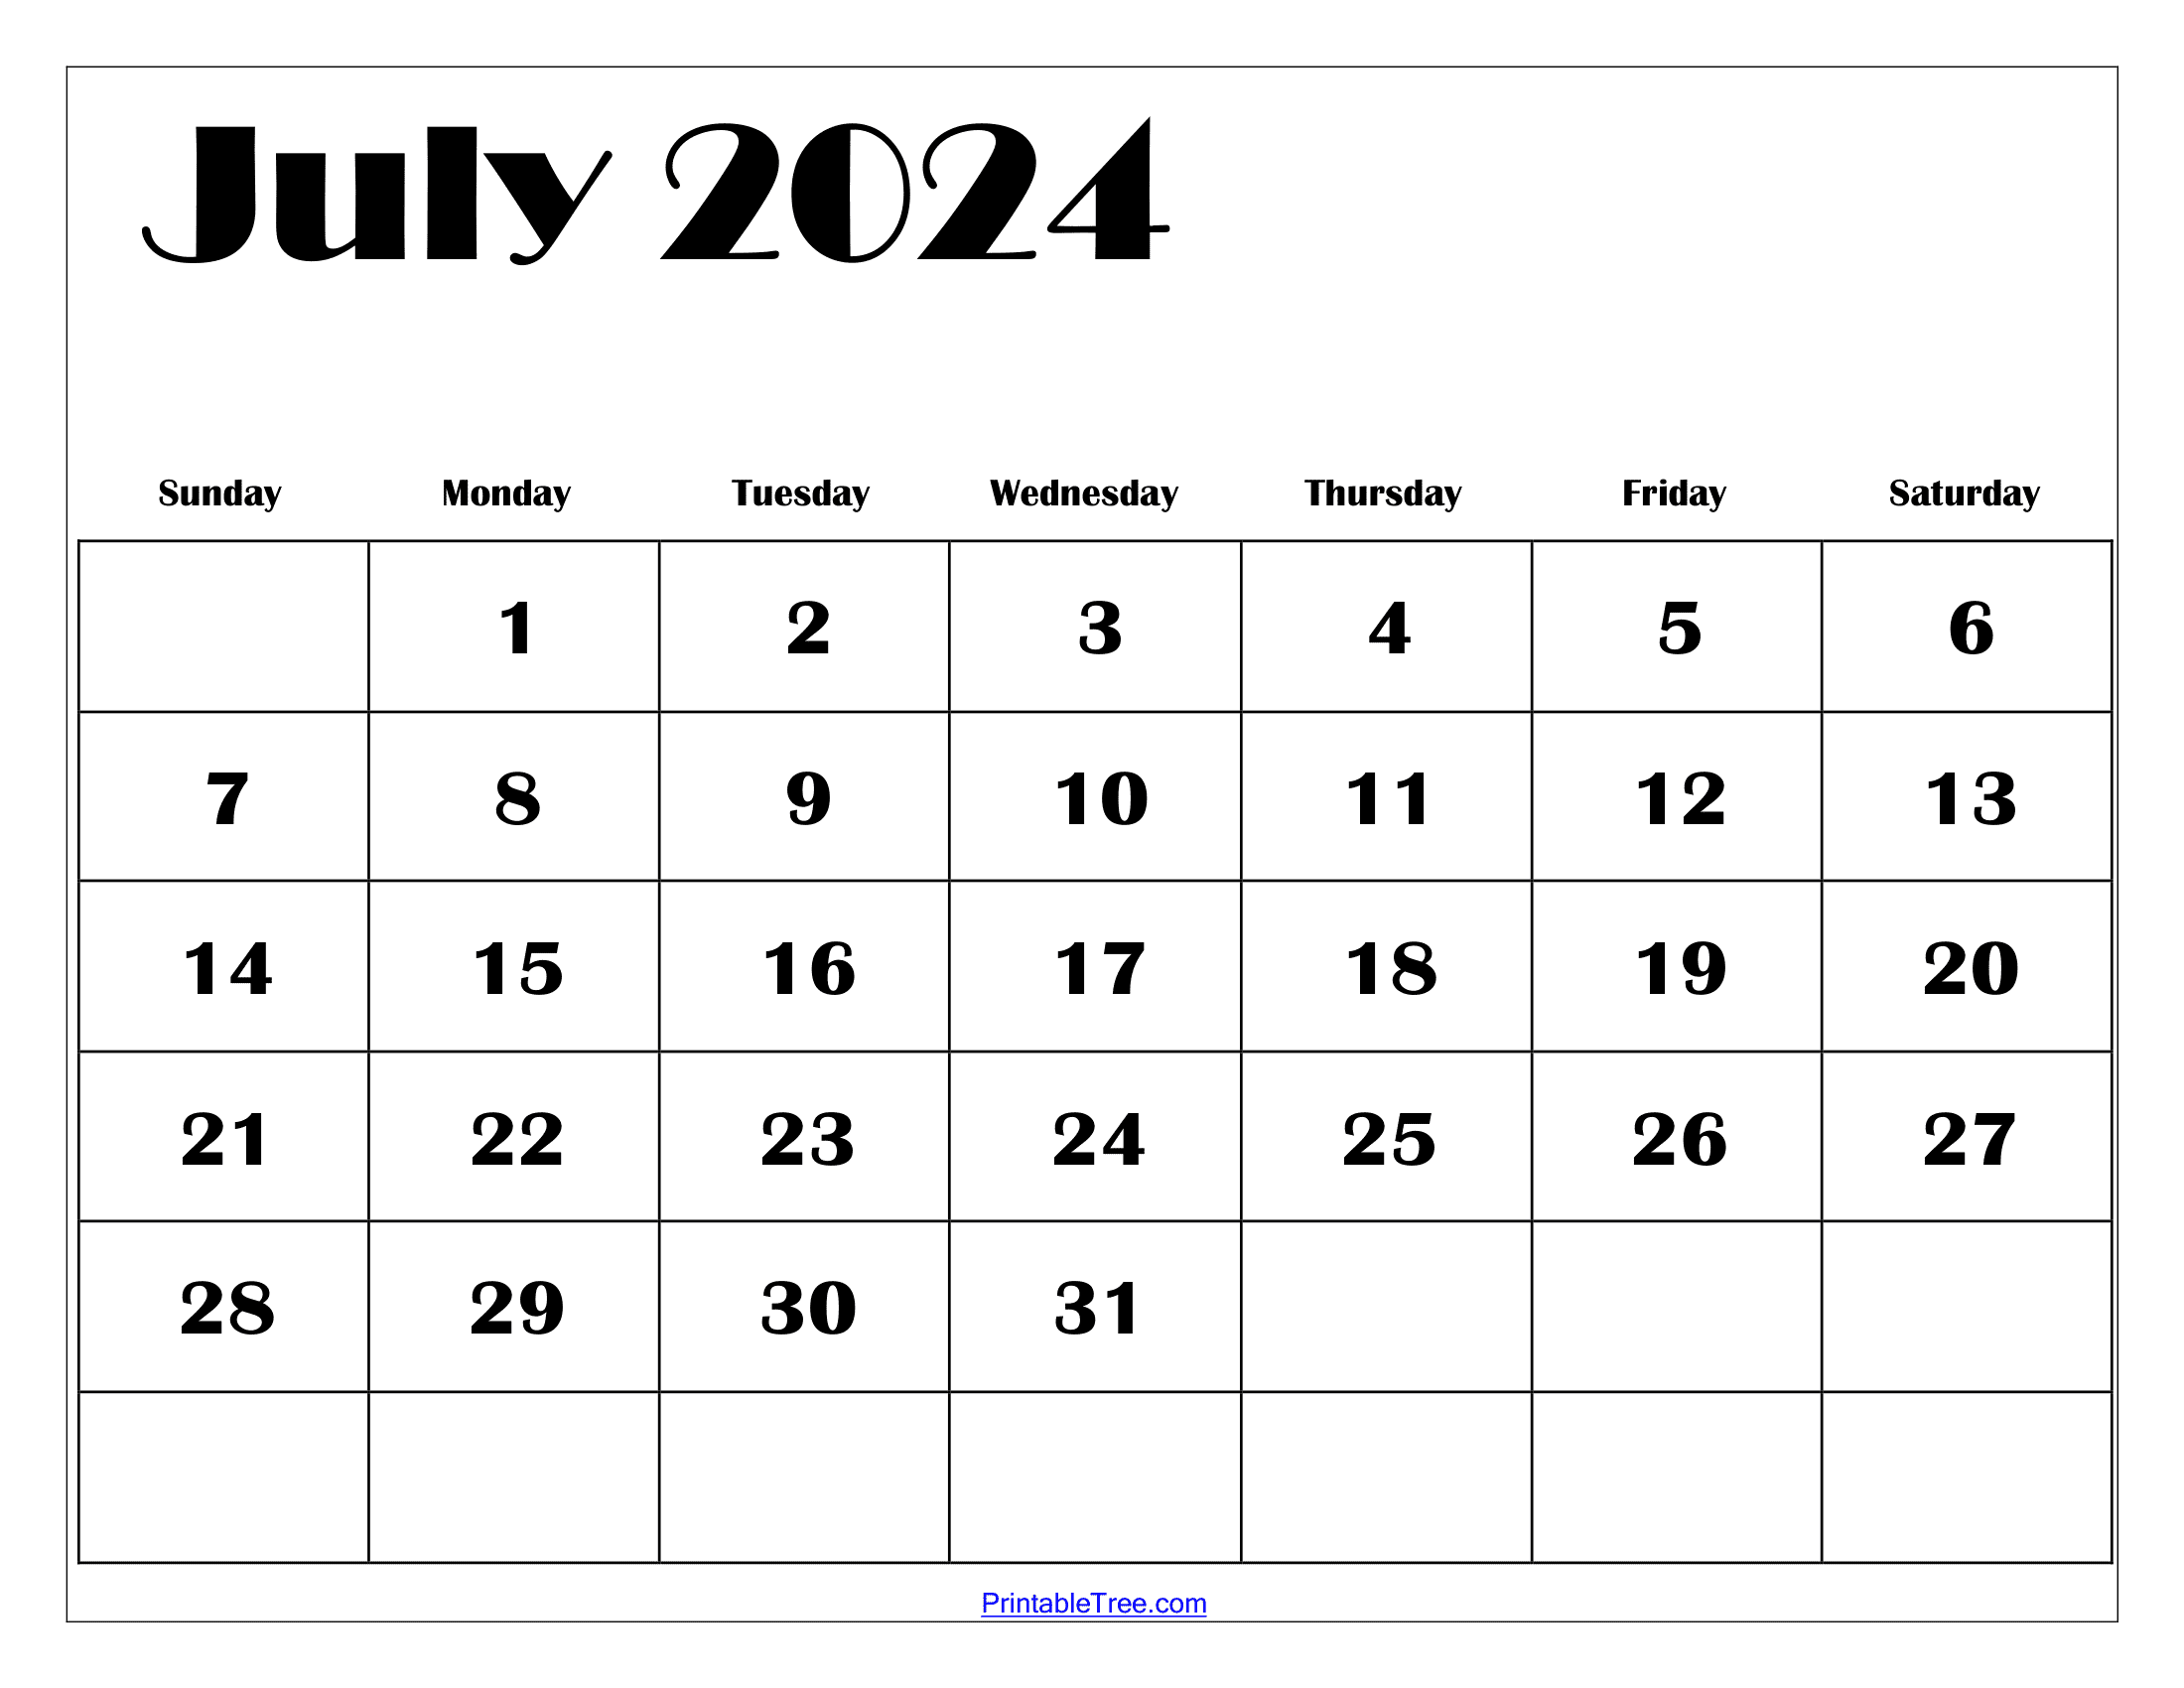 July 2024 Calendar Printable Pdf With Holidays Free Template for July 2024 Printable Calendar